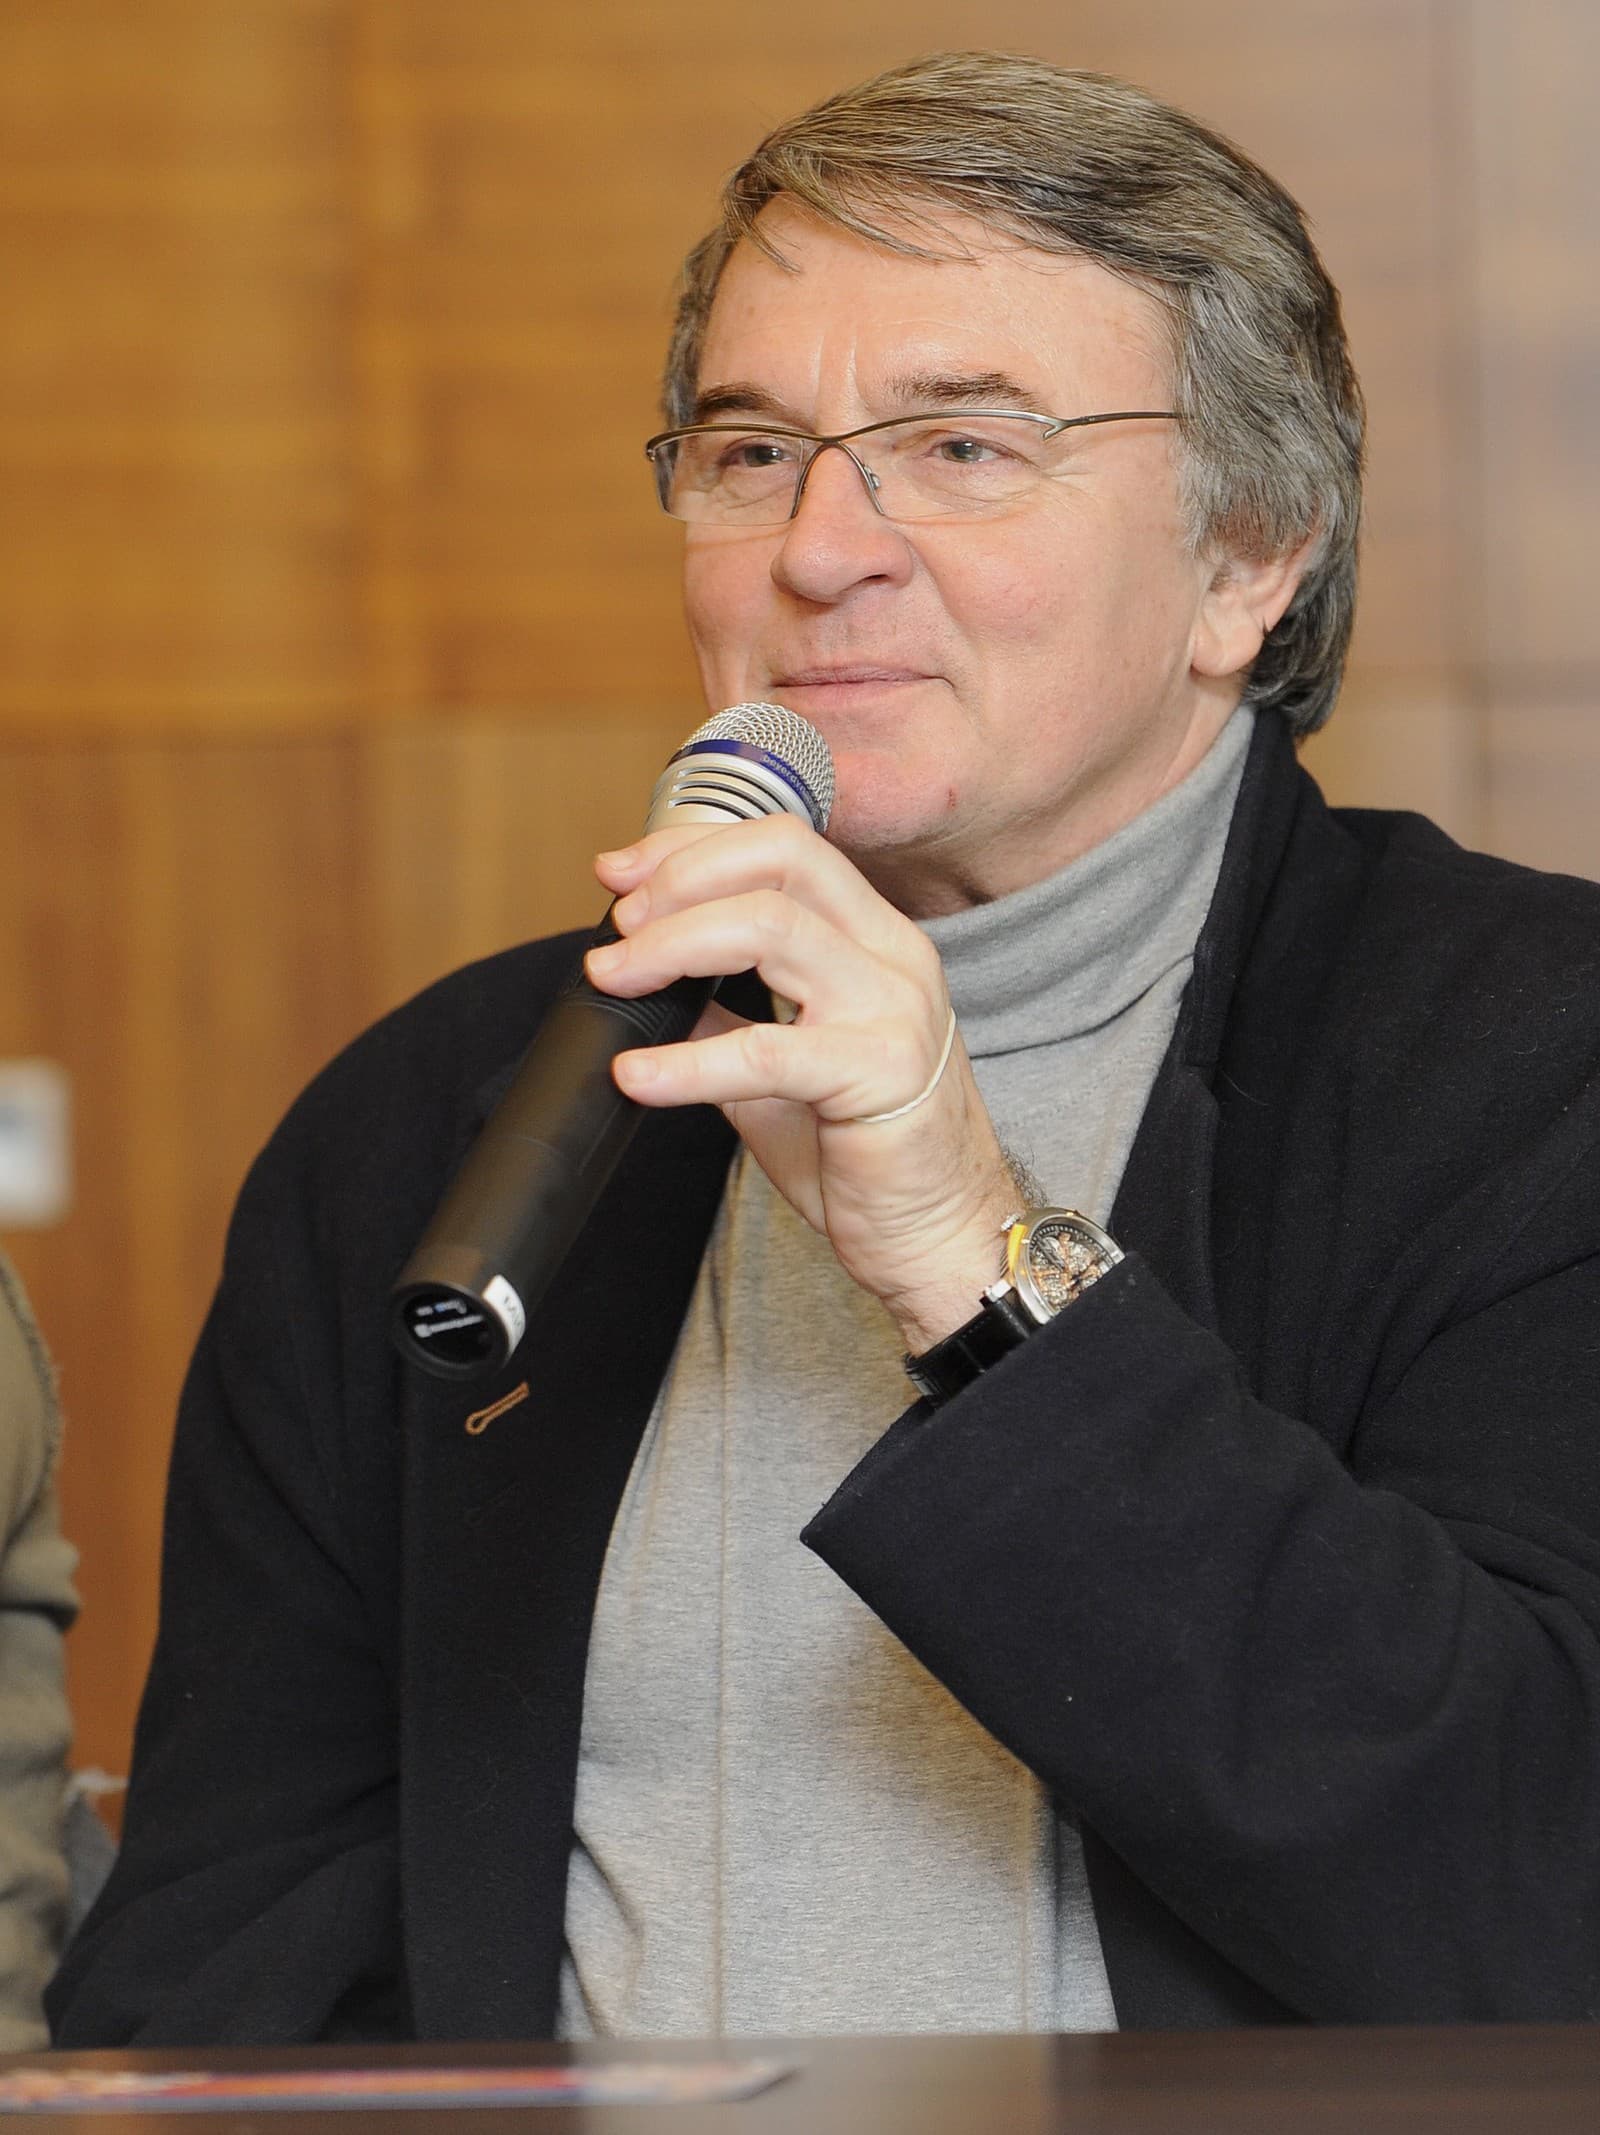 Vlastimil Harapes v roku 2012 (Zdroj: TASR/Michal Svítok)